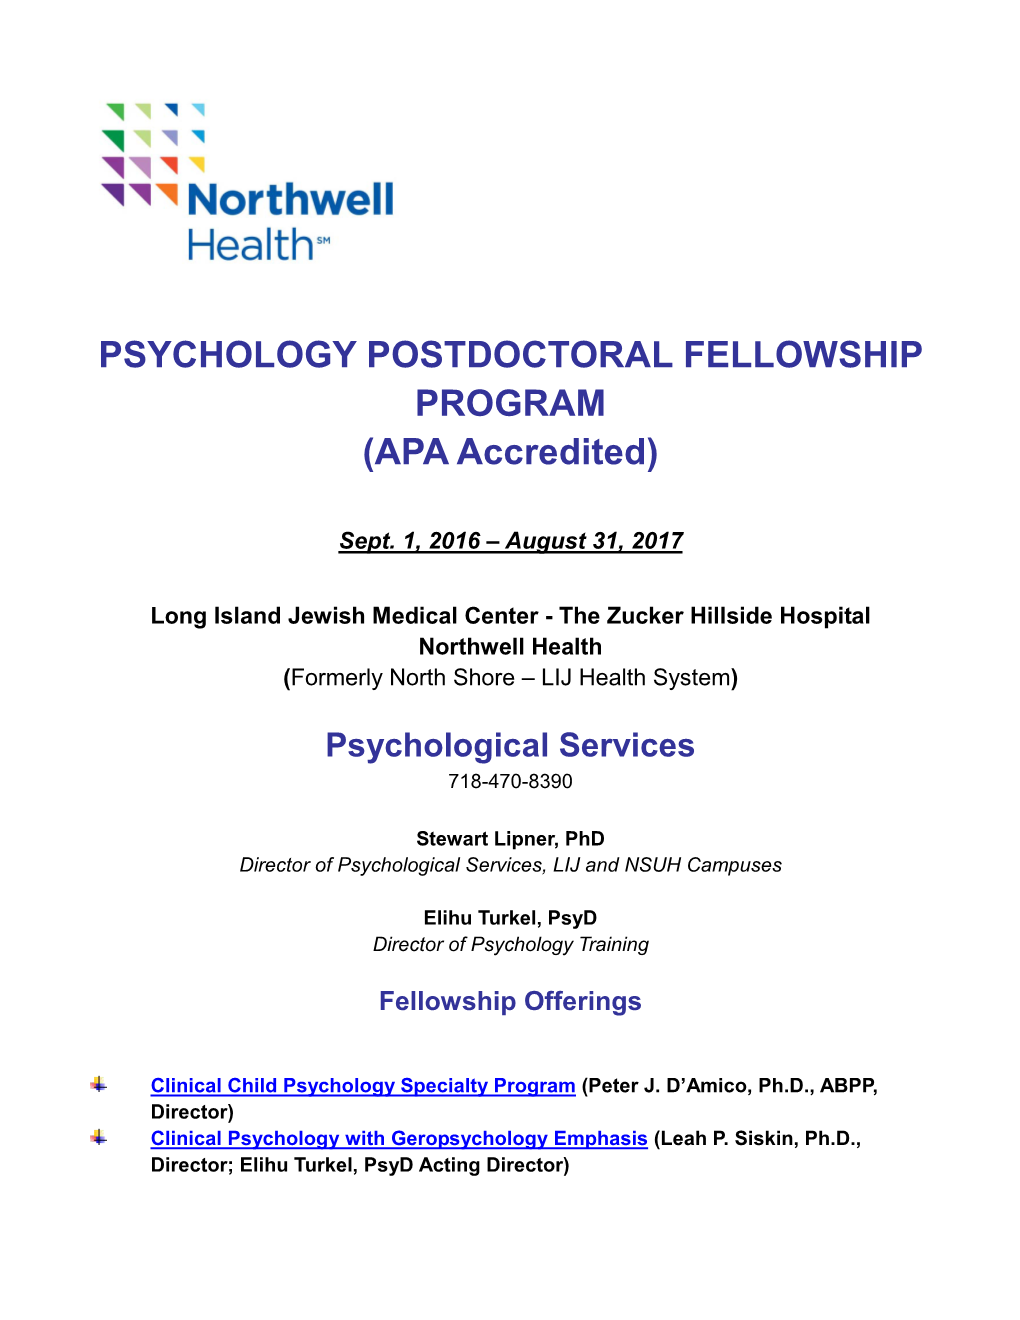 PSYCHOLOGY POSTDOCTORAL FELLOWSHIP PROGRAM (APA Accredited)